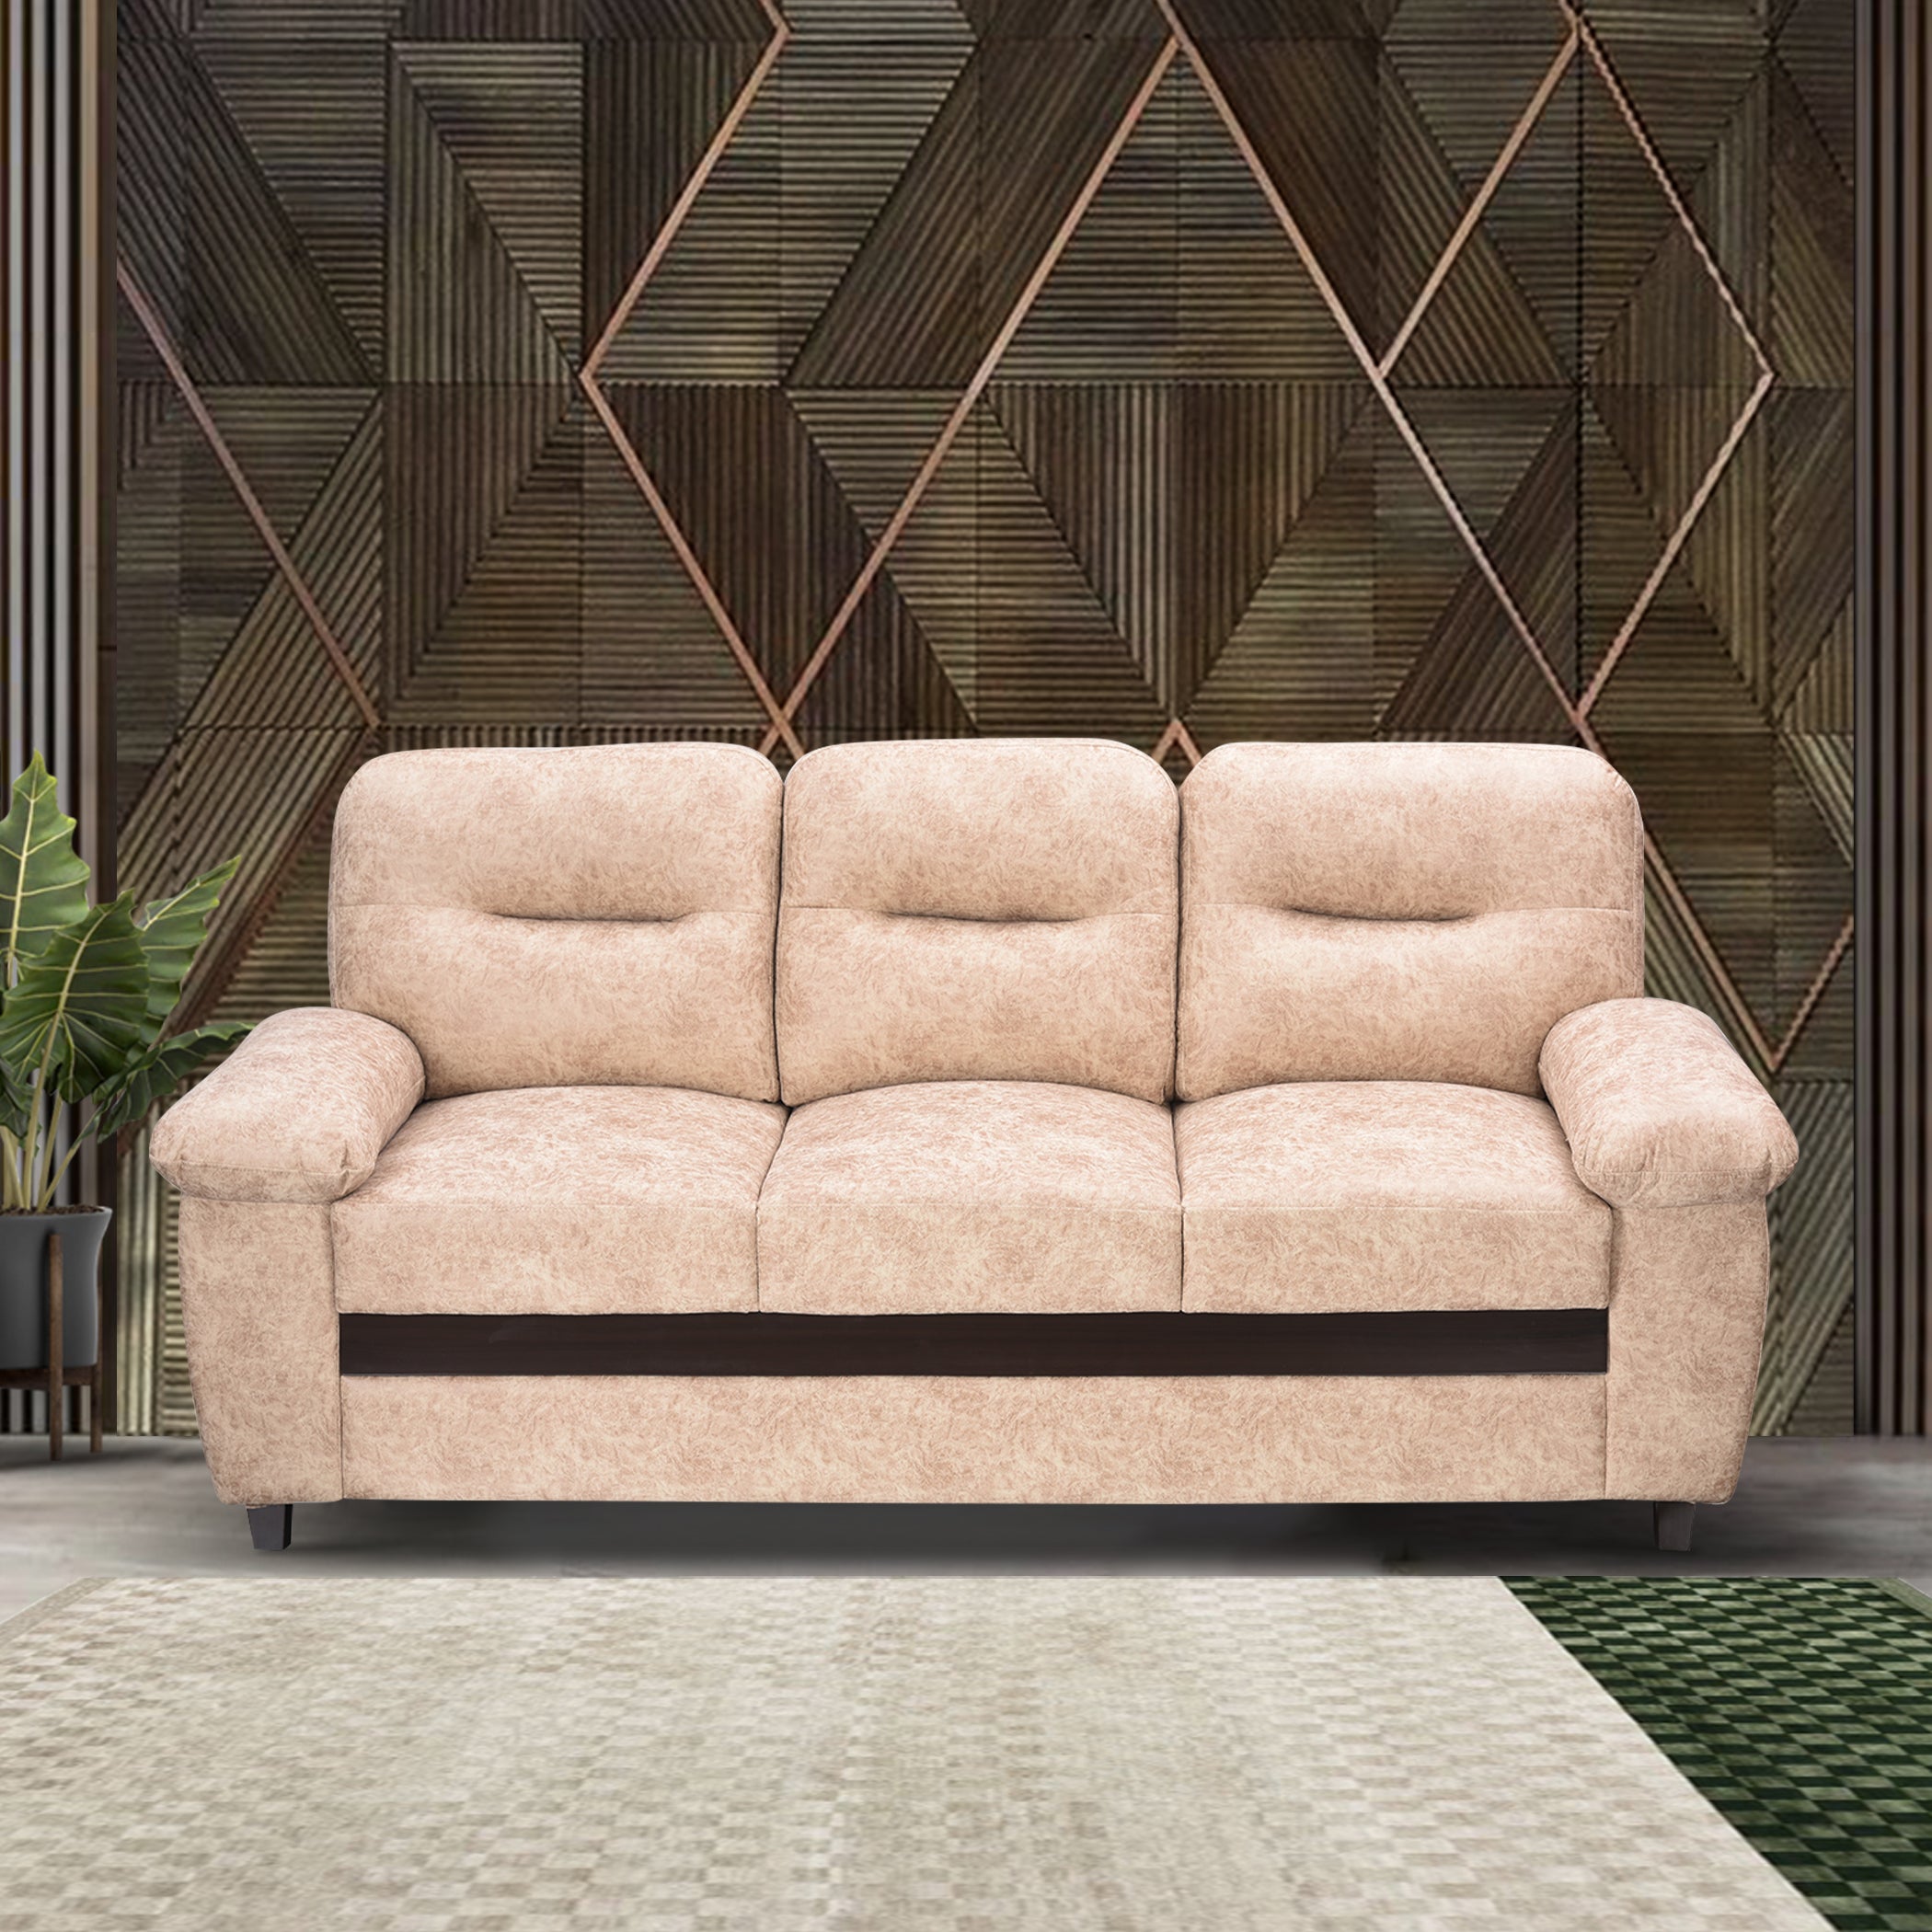 Berlin TexturedWhite 3S Sofa by Zorin Zorin